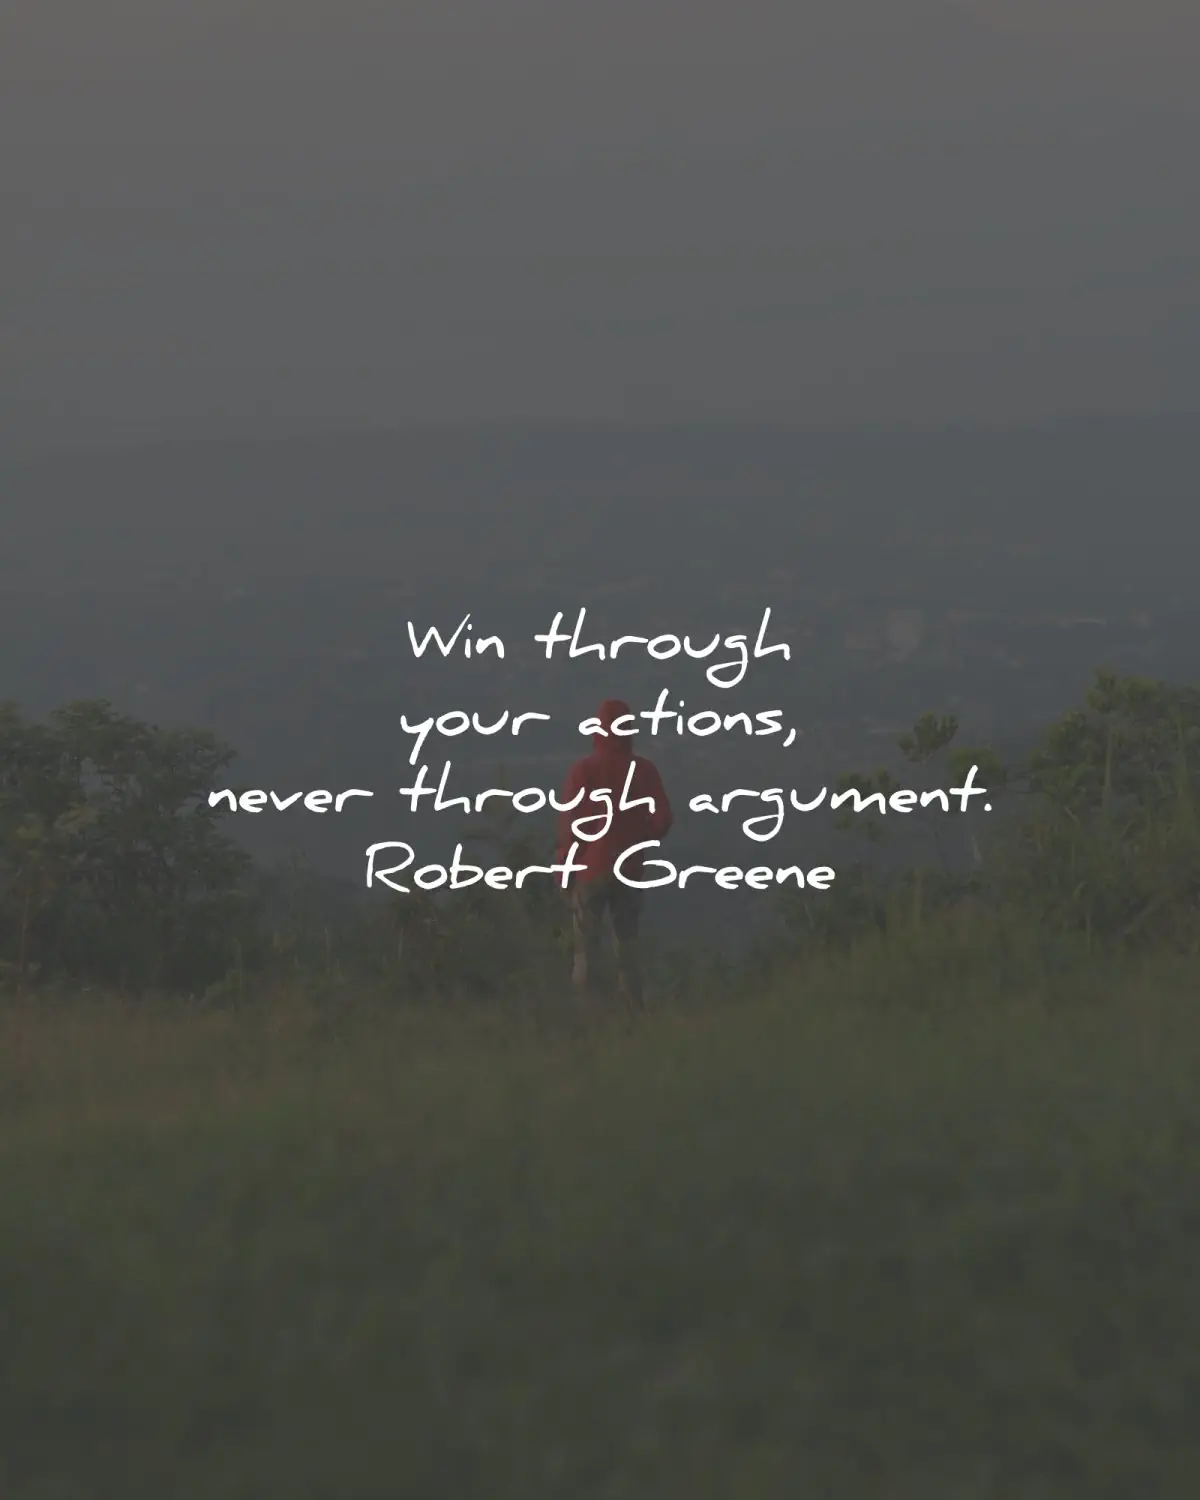 robert greene quotes win through actions arguments wisdom